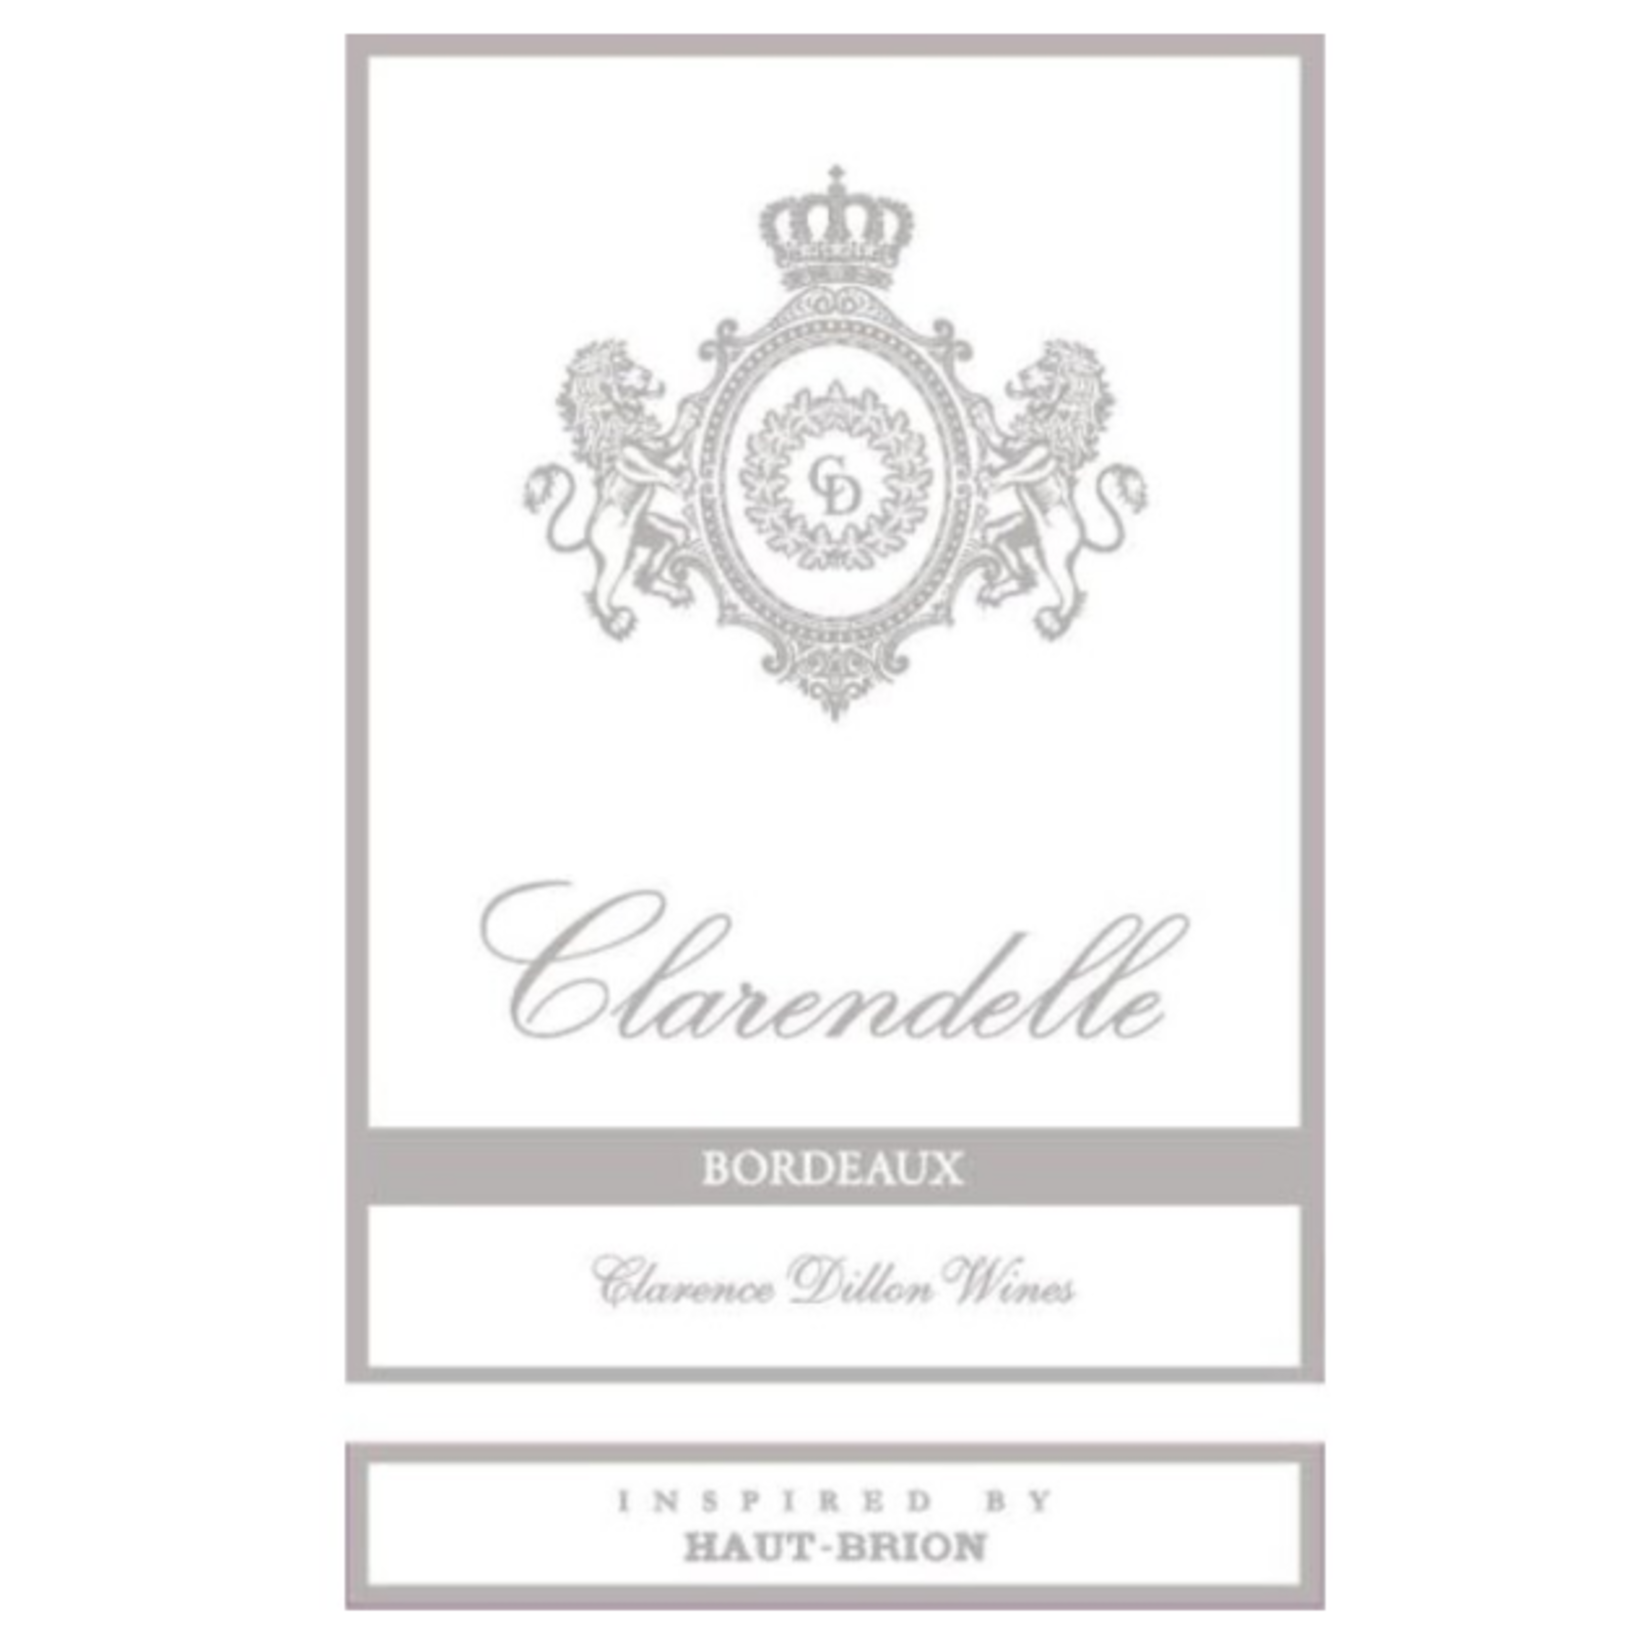 Clarence Dillon Wines Clarendale White Bordeaux